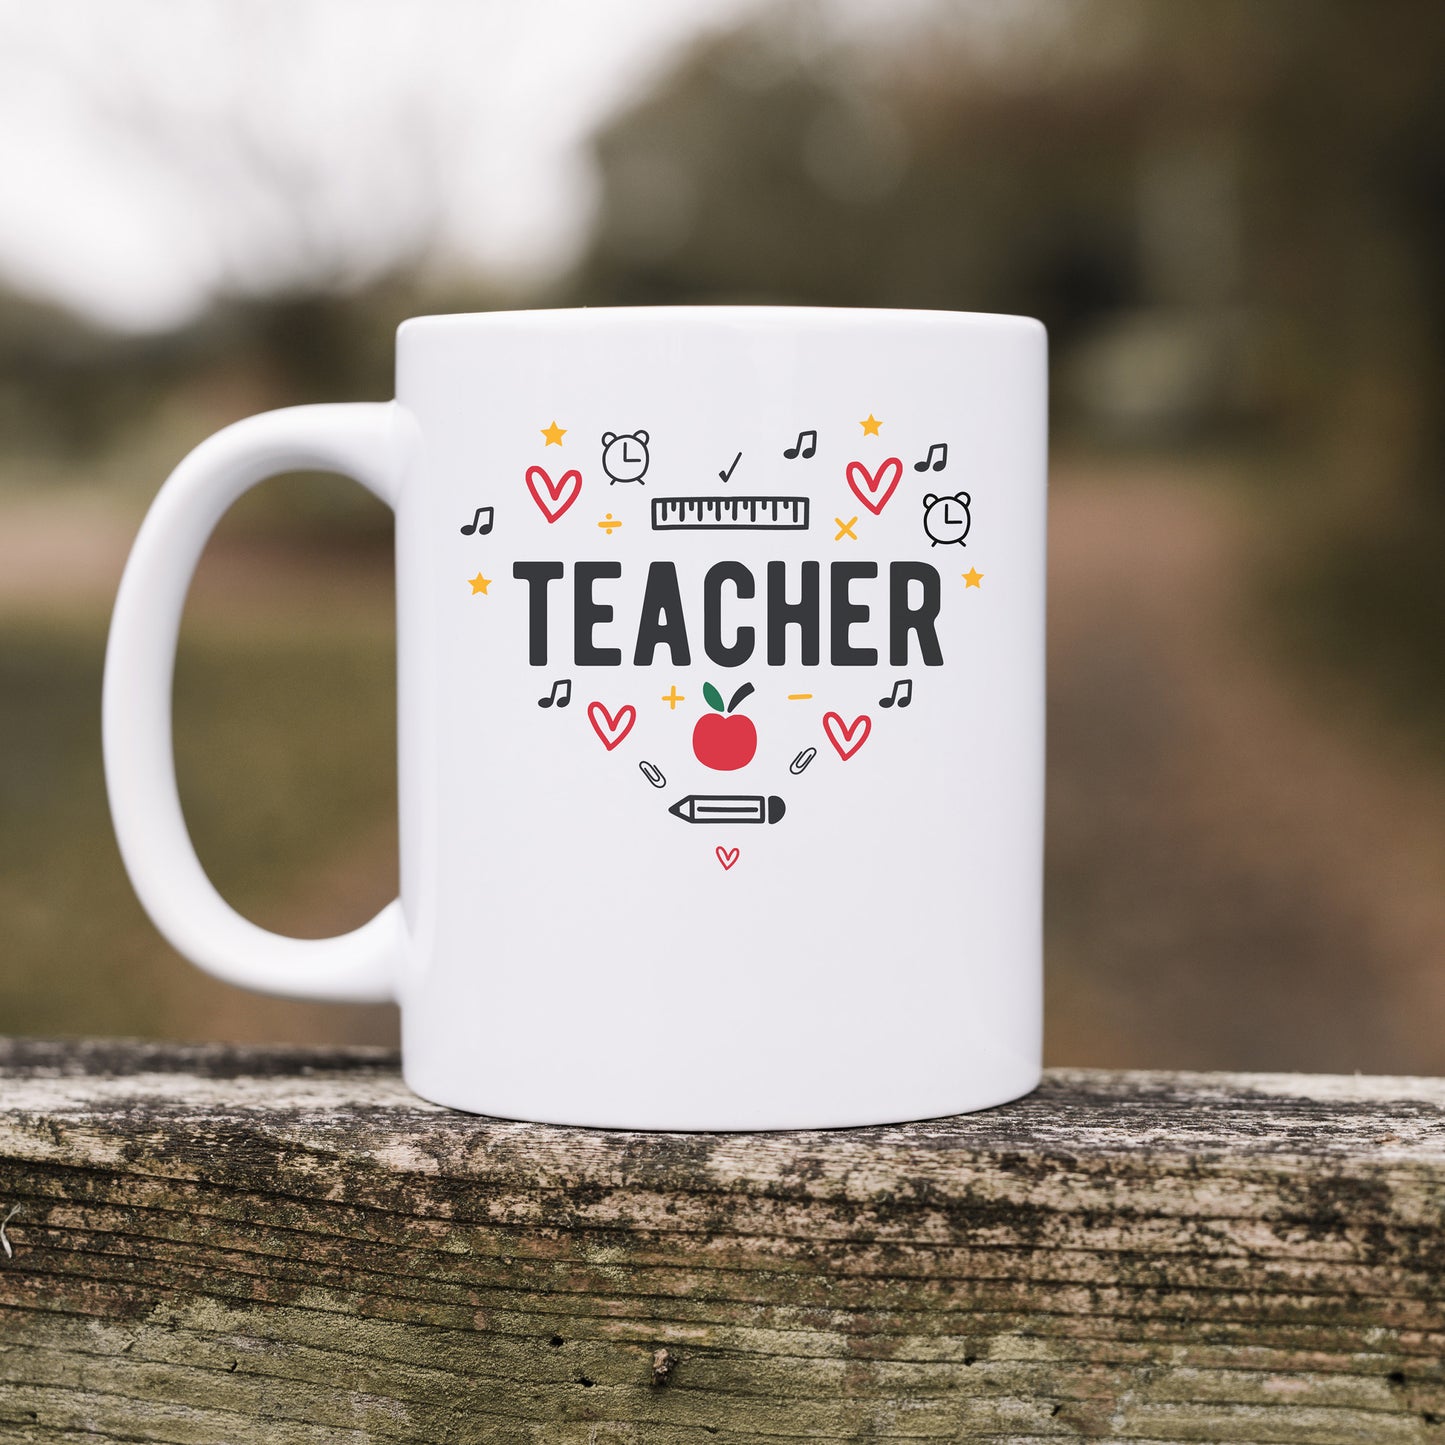 "Teacher" Graphic